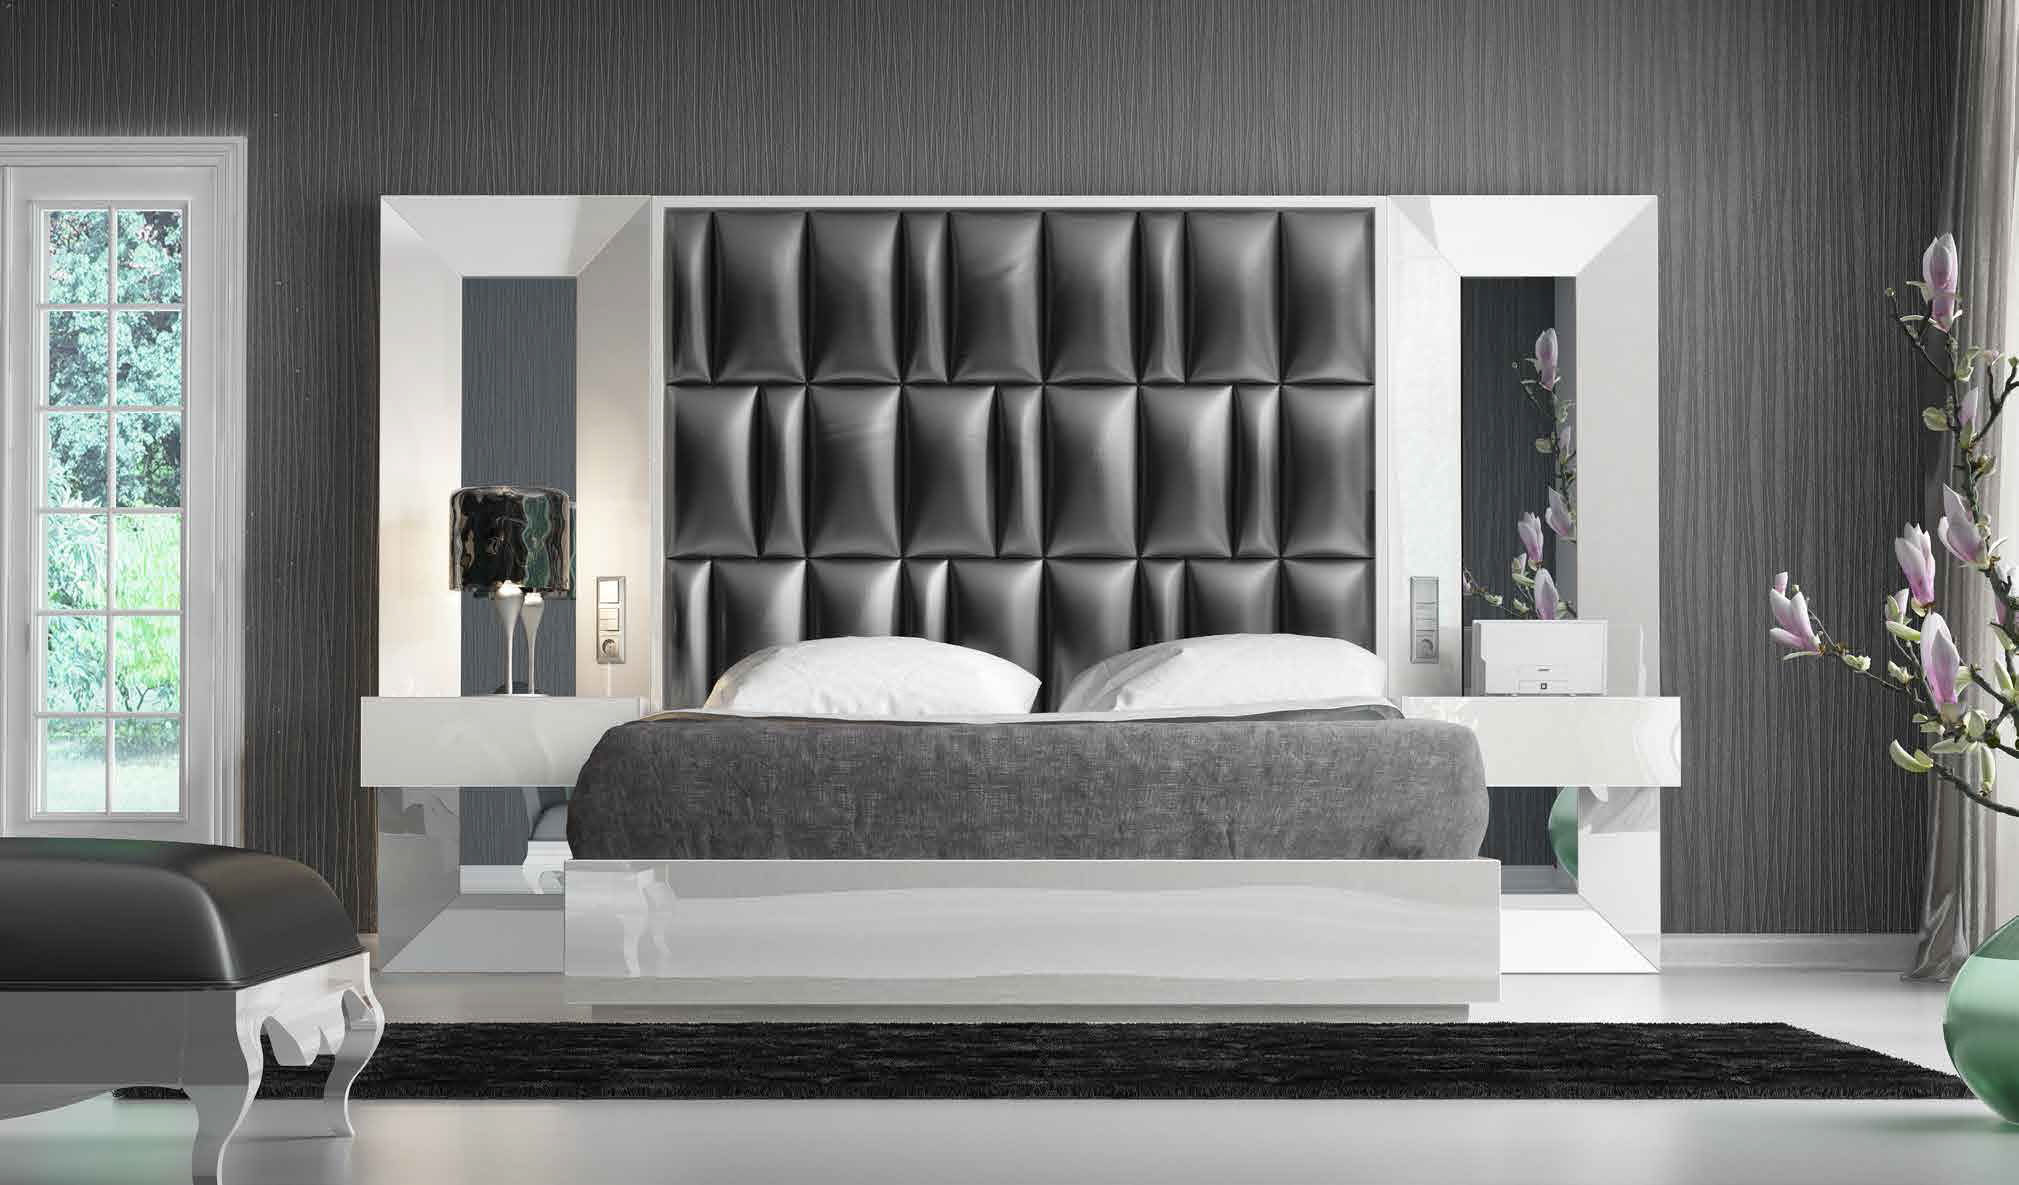 Brands Franco Furniture Bedrooms vol1, Spain DOR 33